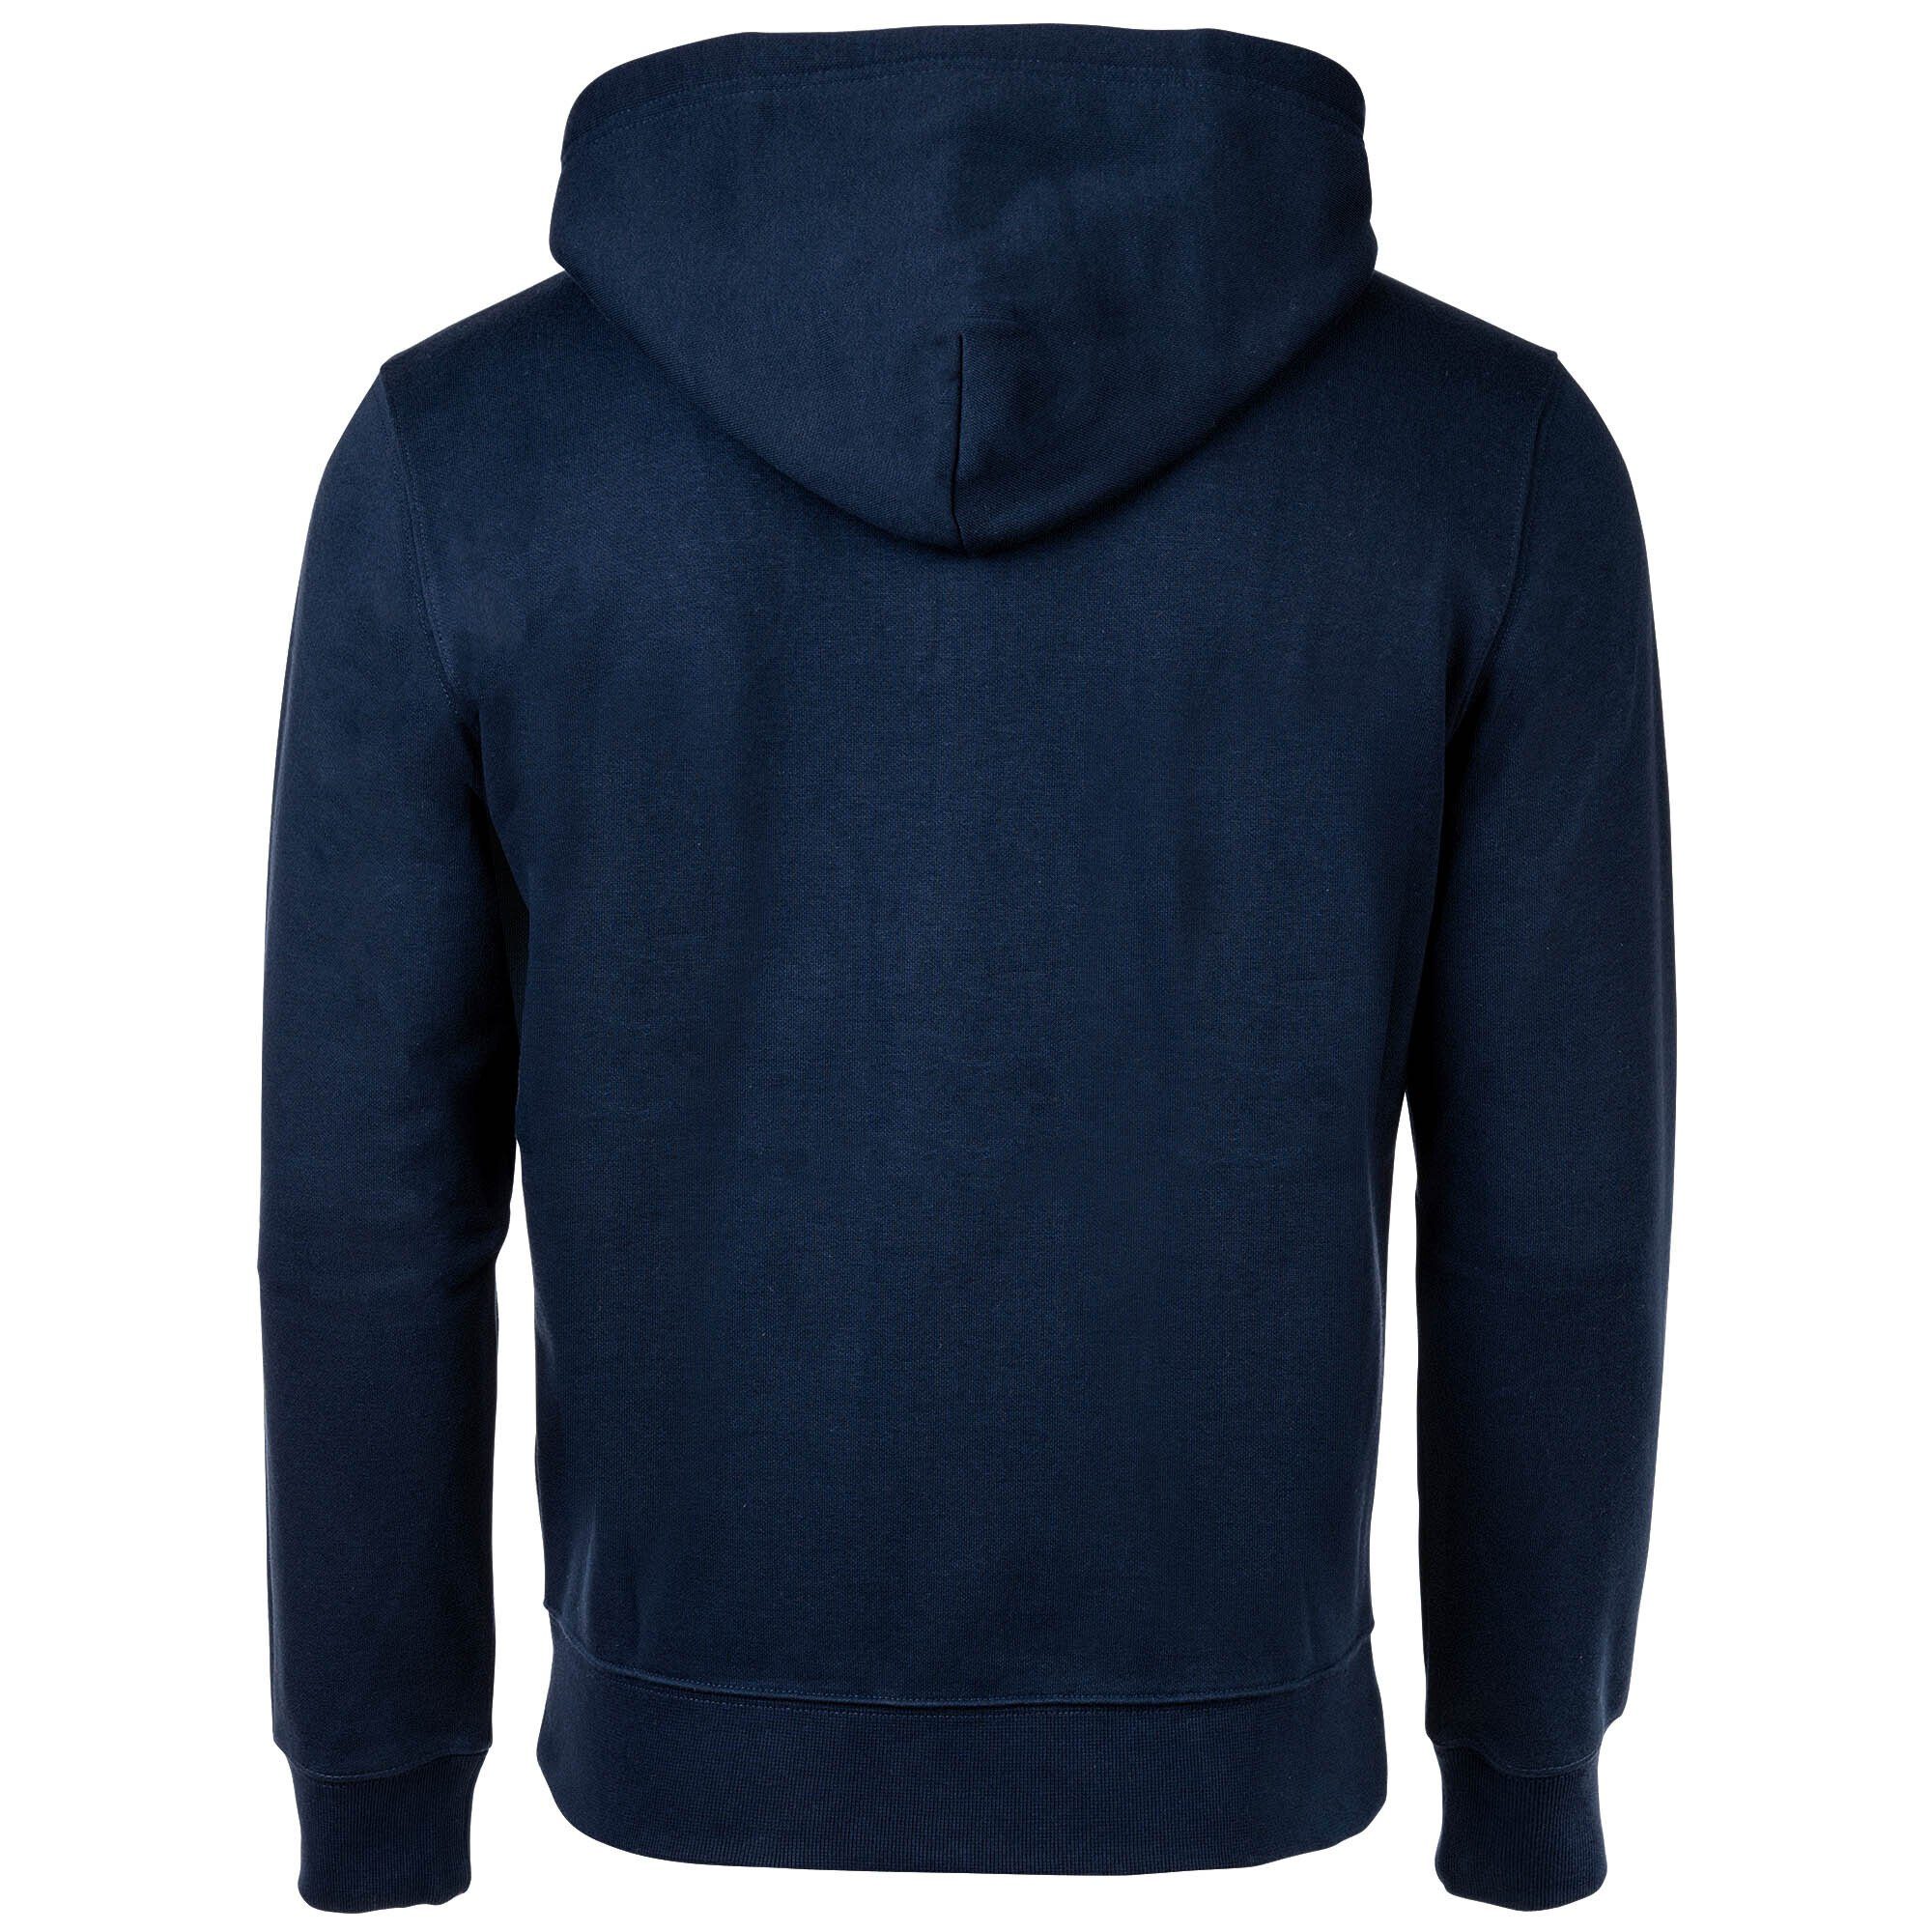 Champion Herren Hooded Sweatshirt Sweatshirt Blau Full - Sweatjacke Zip